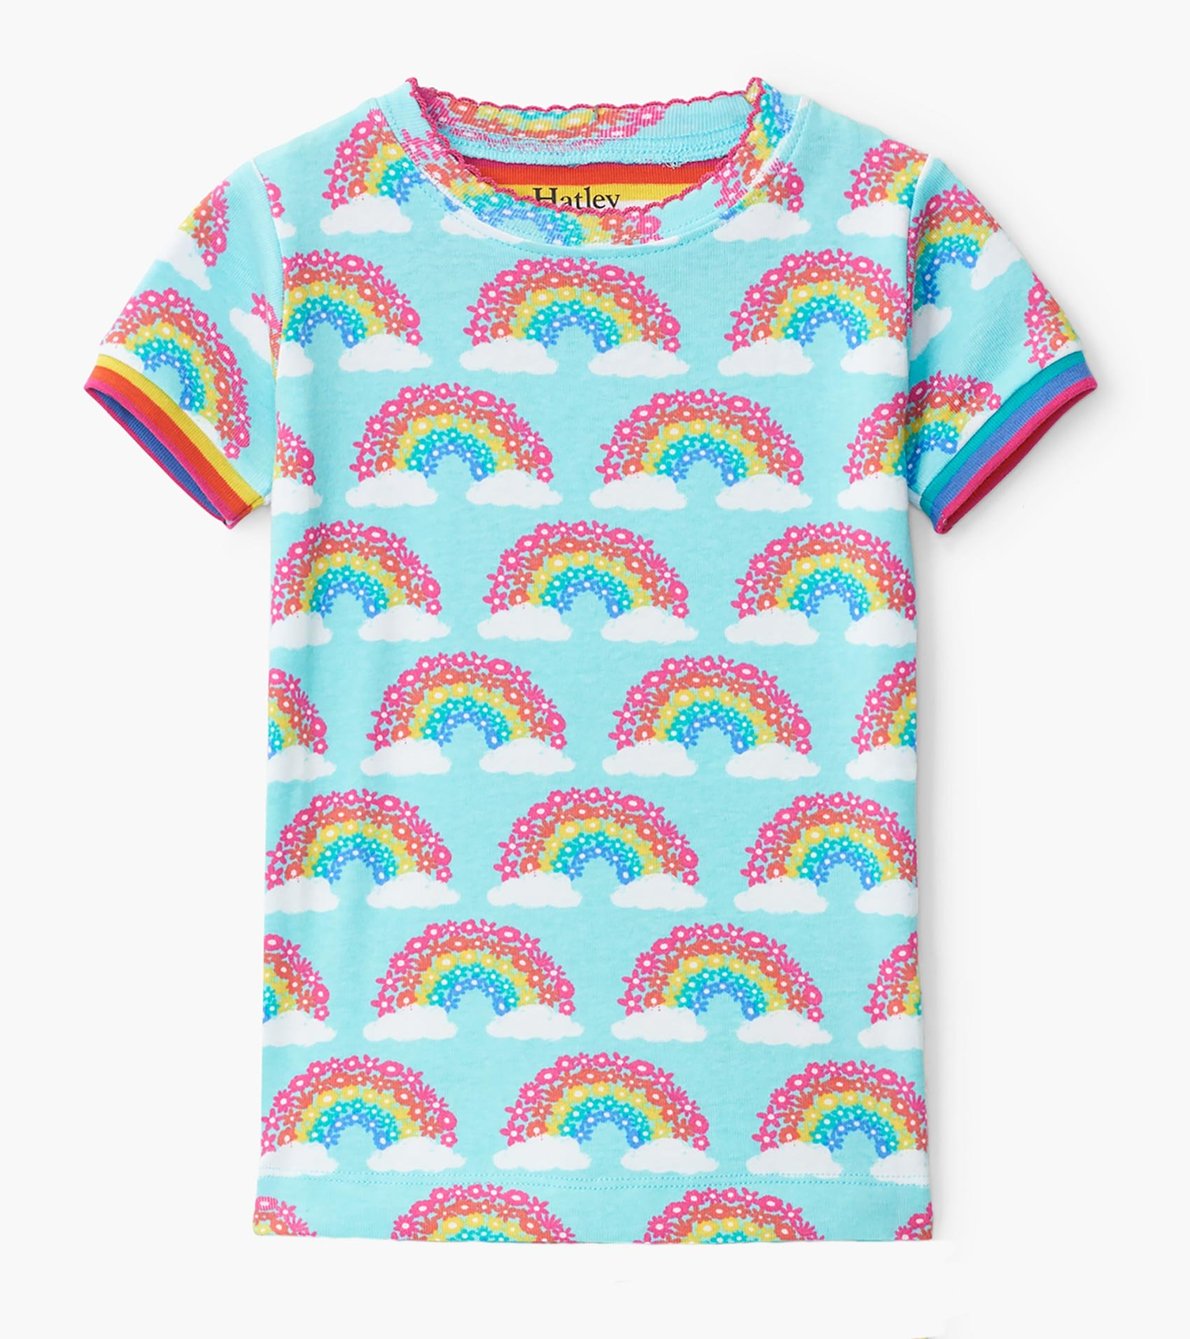 View larger image of Magical Rainbows Organic Cotton Short Pajama Set